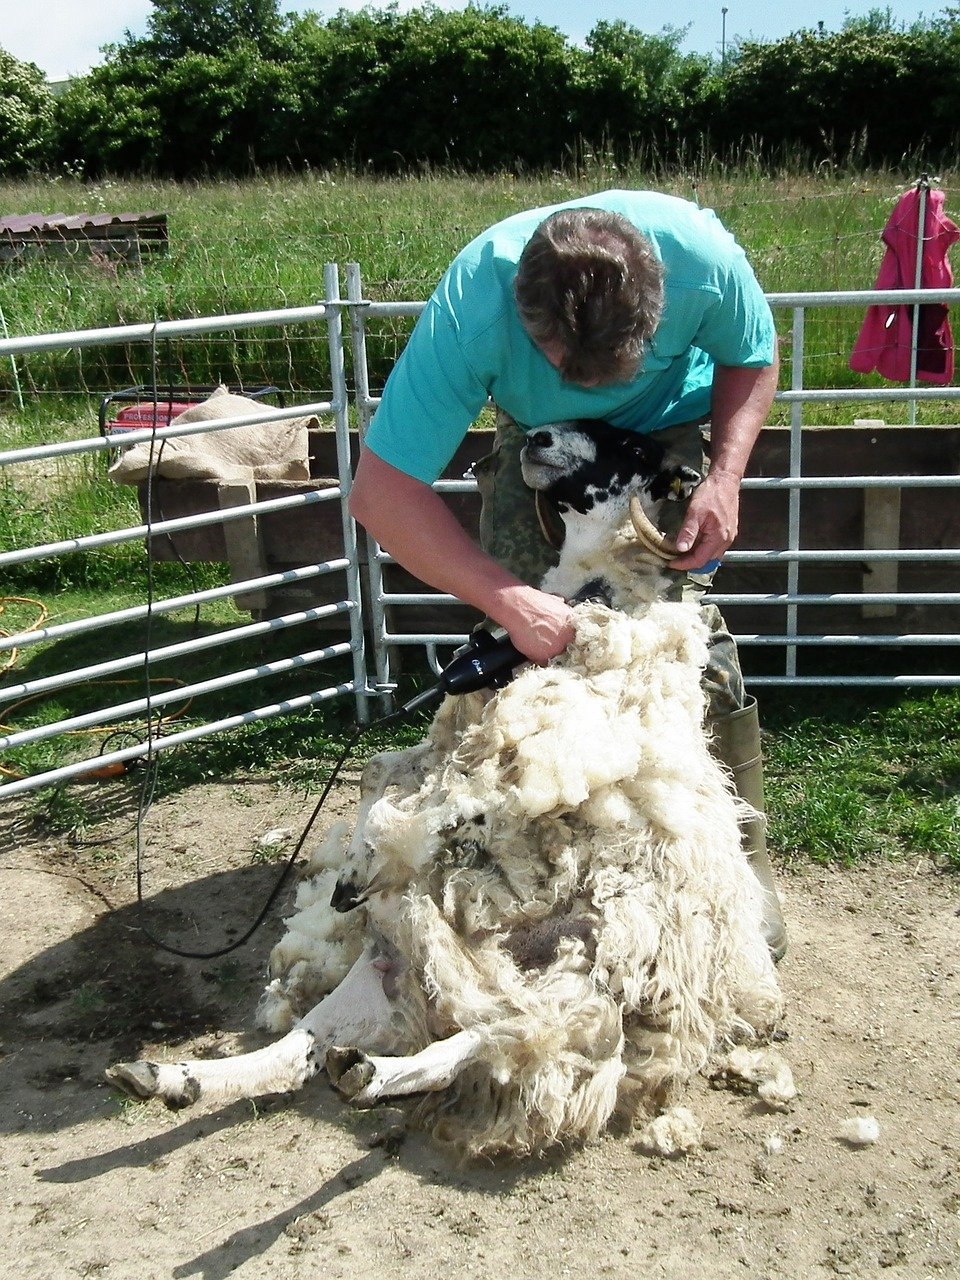 sheep-shearing.jpg